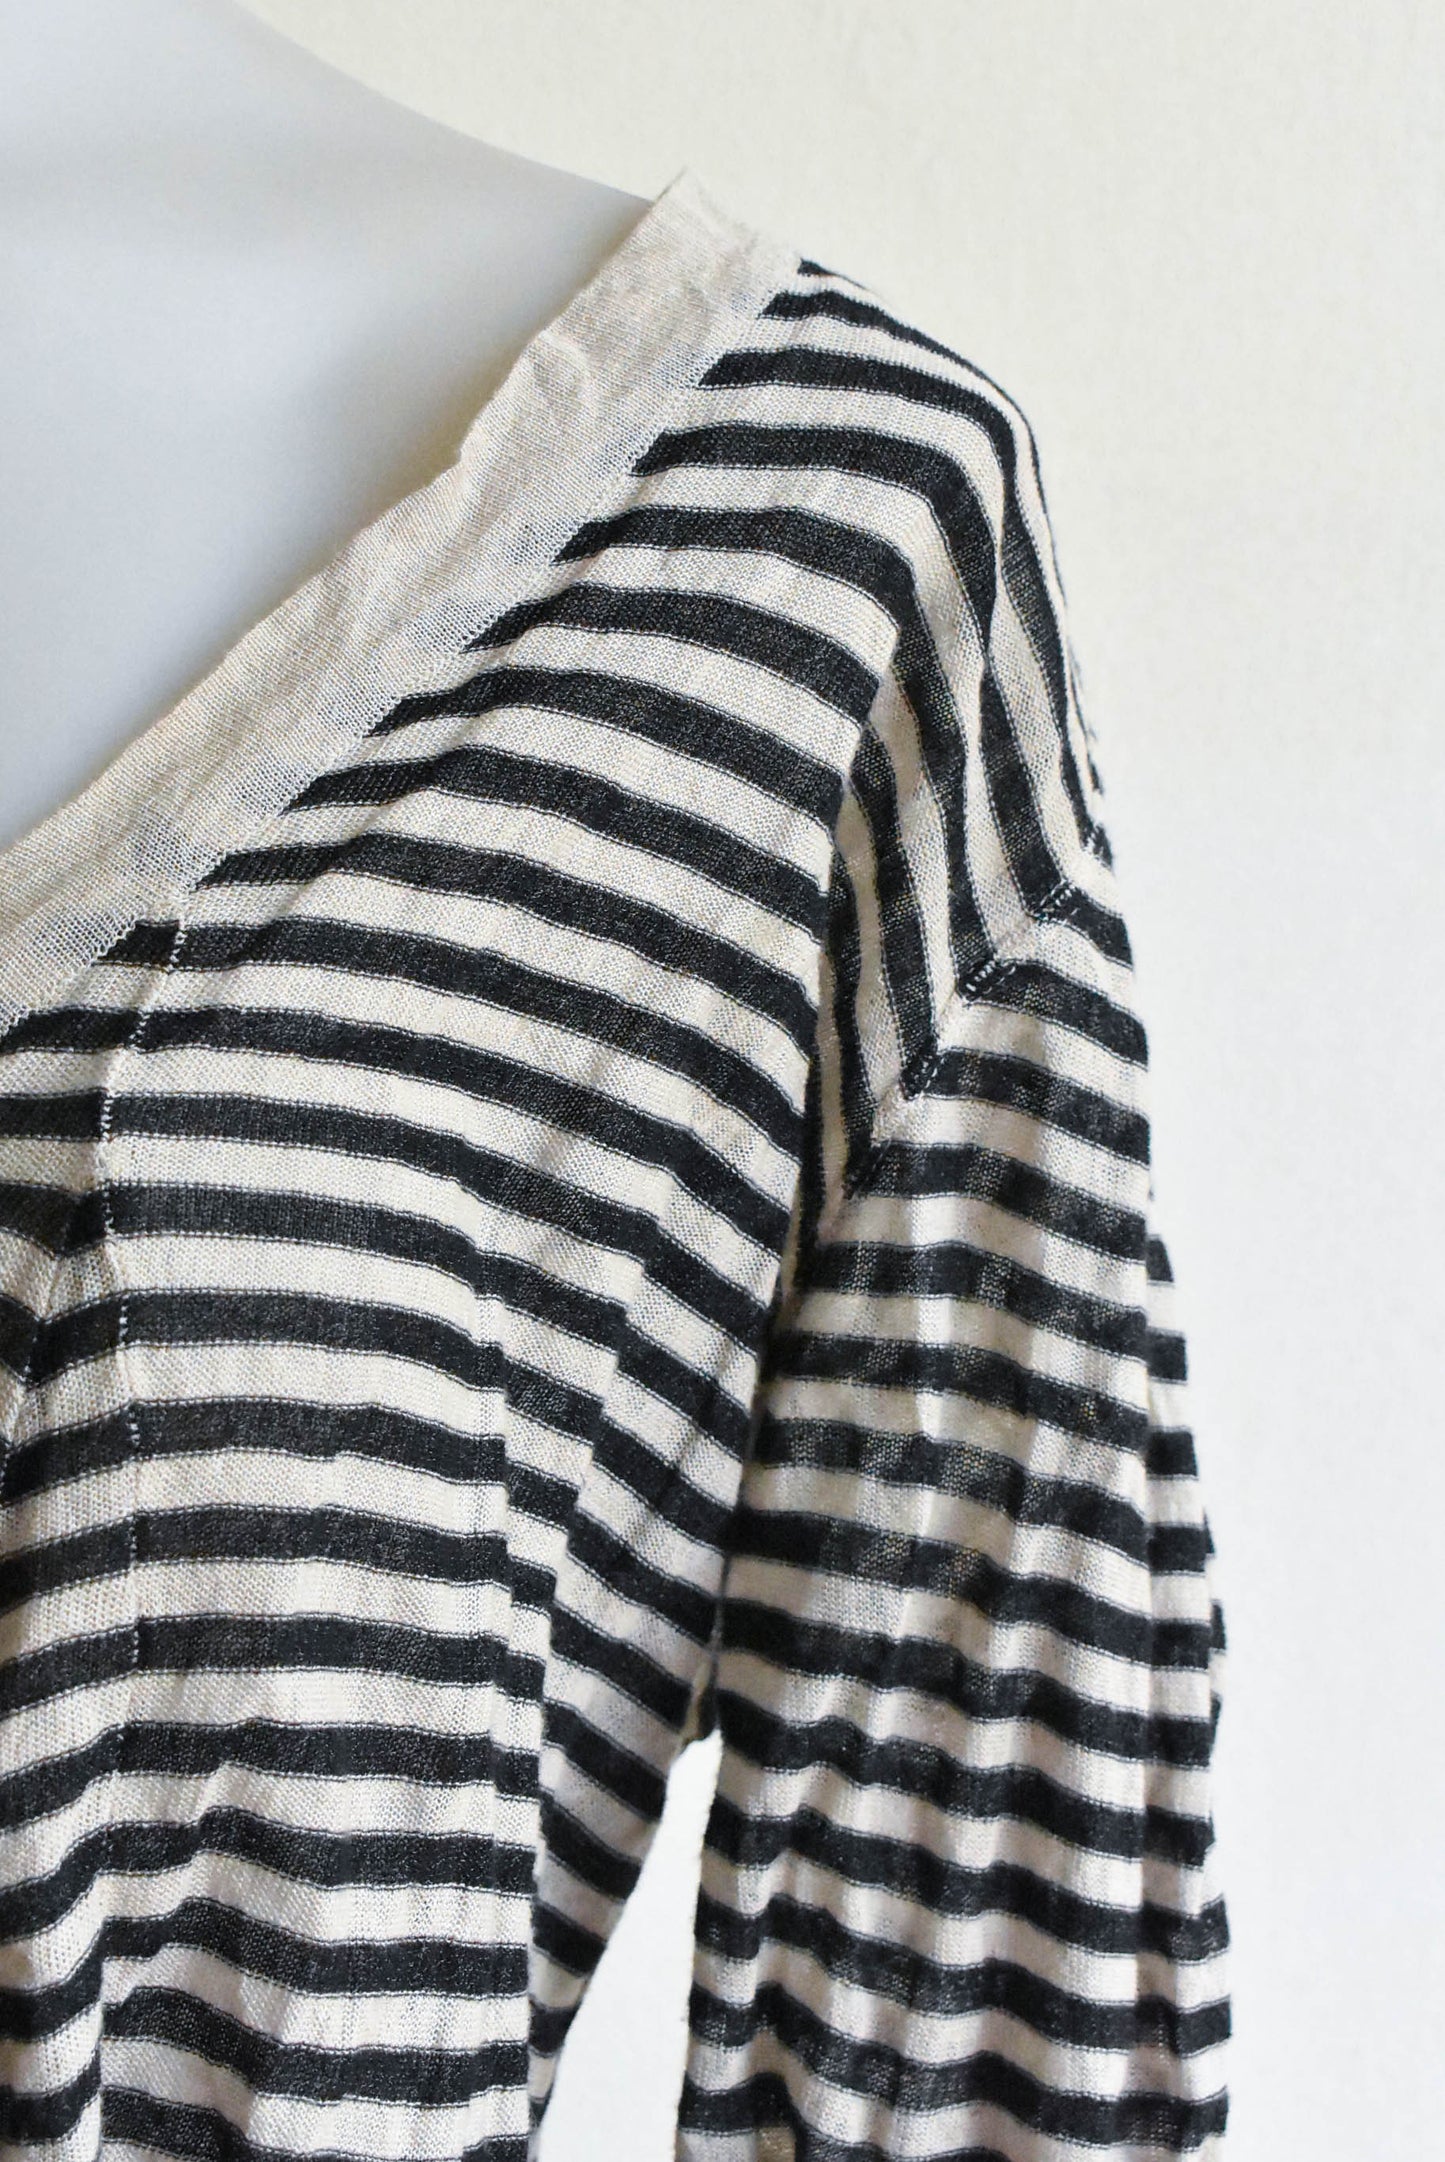 Calliope striped steel cardigan, size M